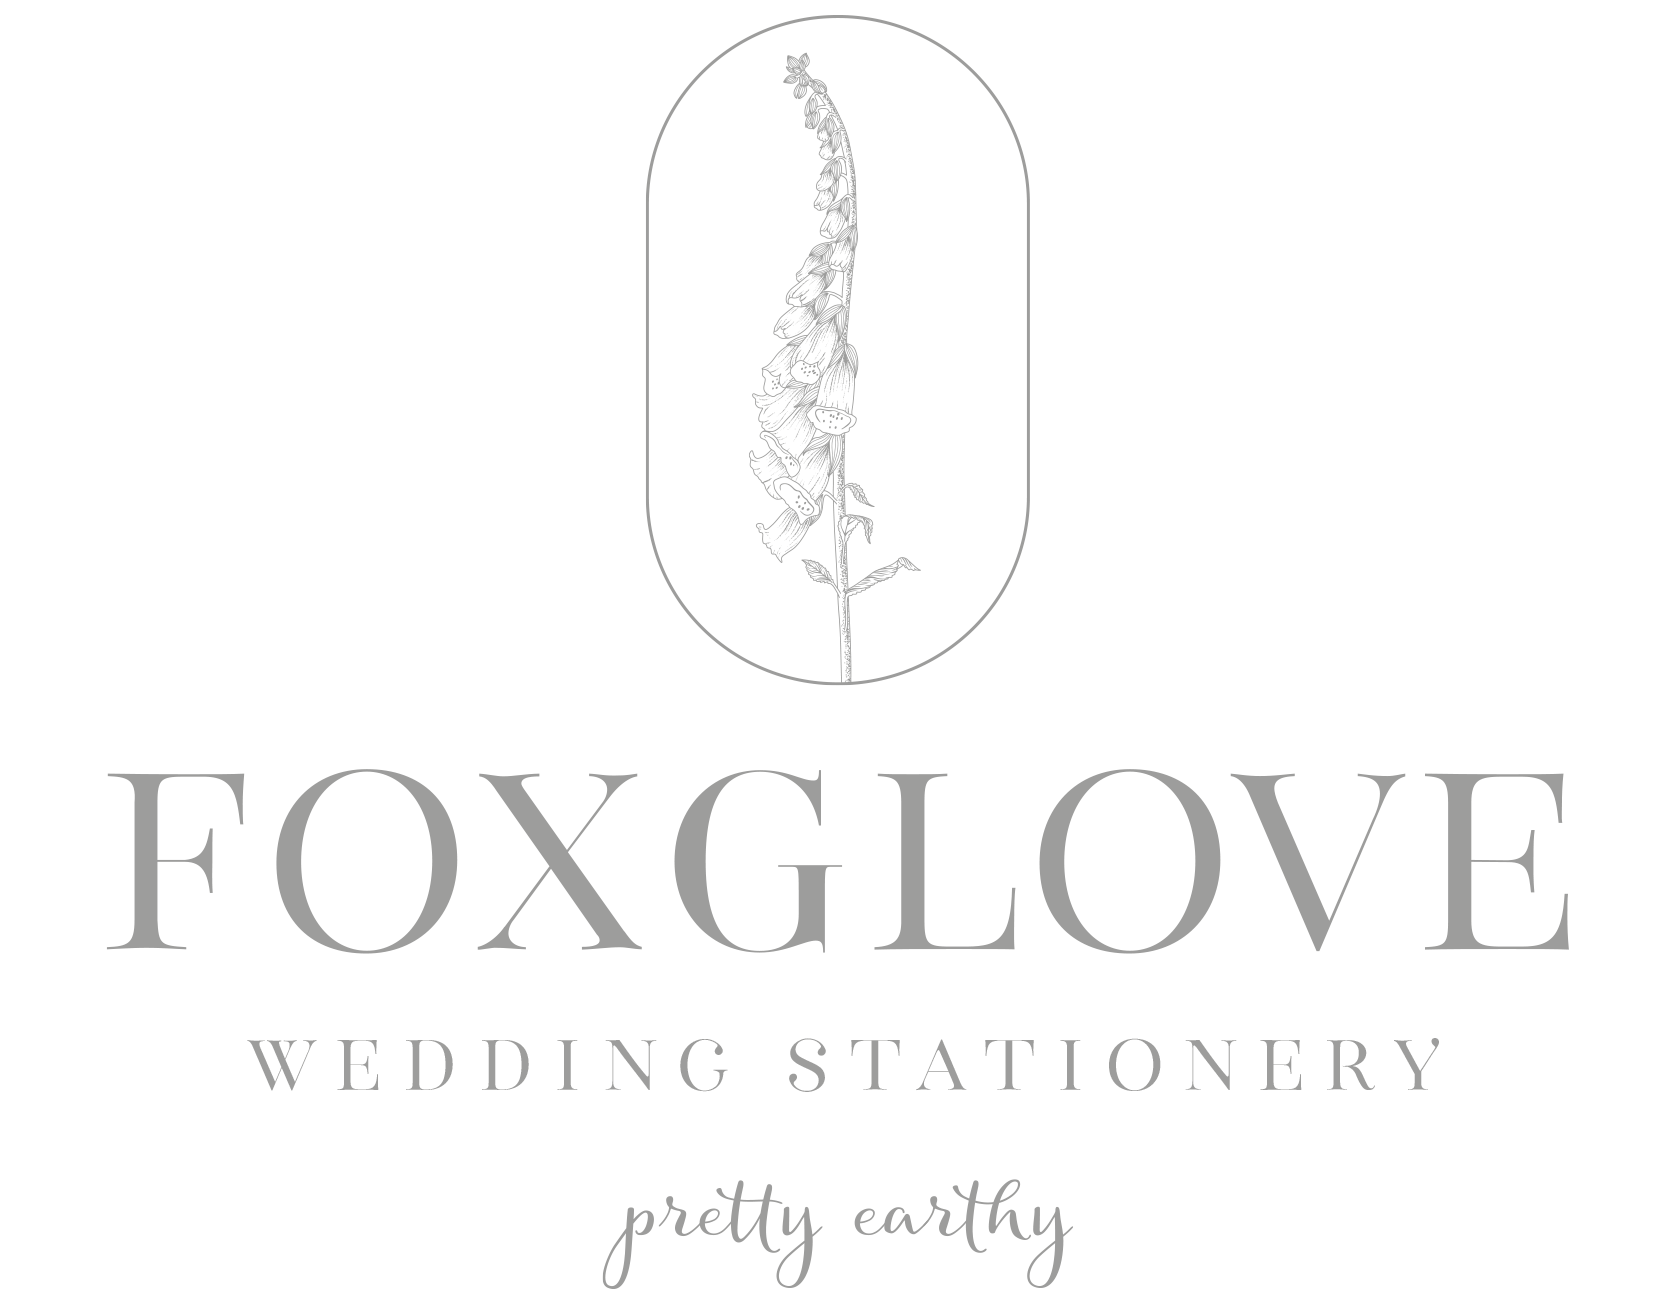 Foxglove Wedding Stationery